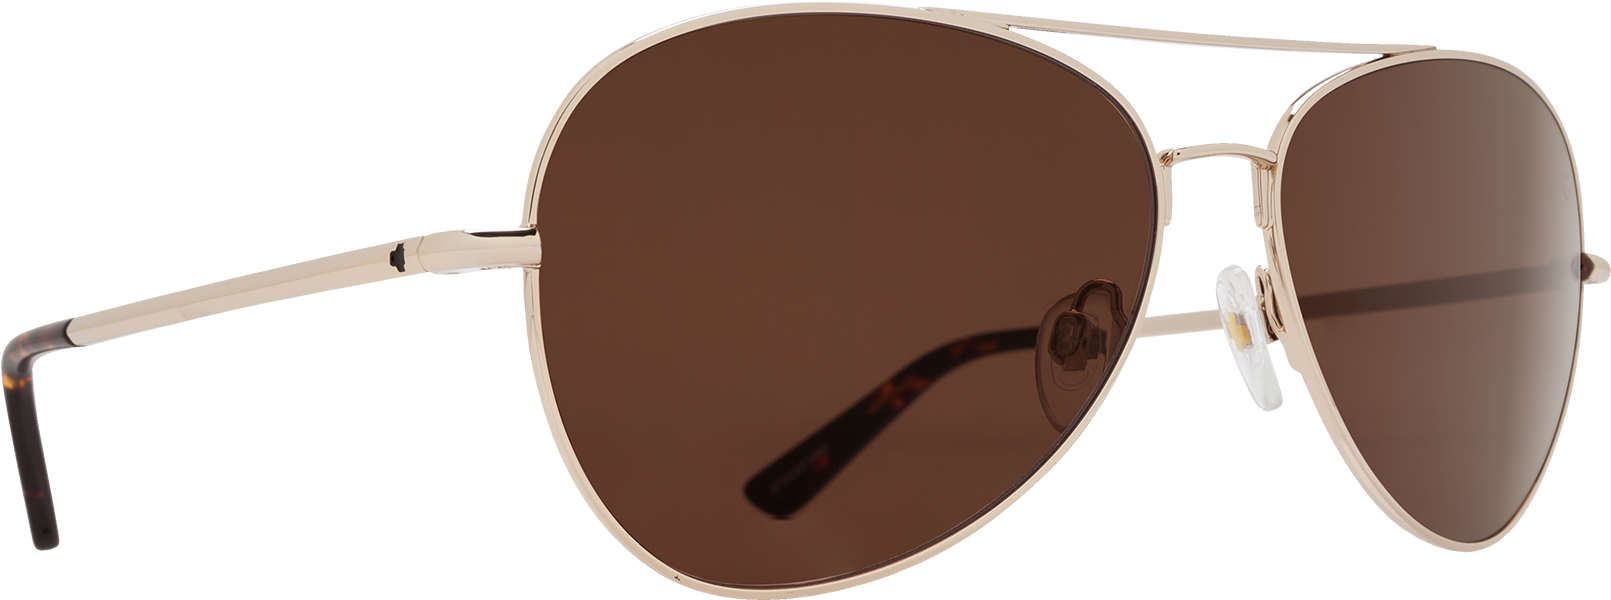 Classic Aviator Sunglasses Brown Lens PNG